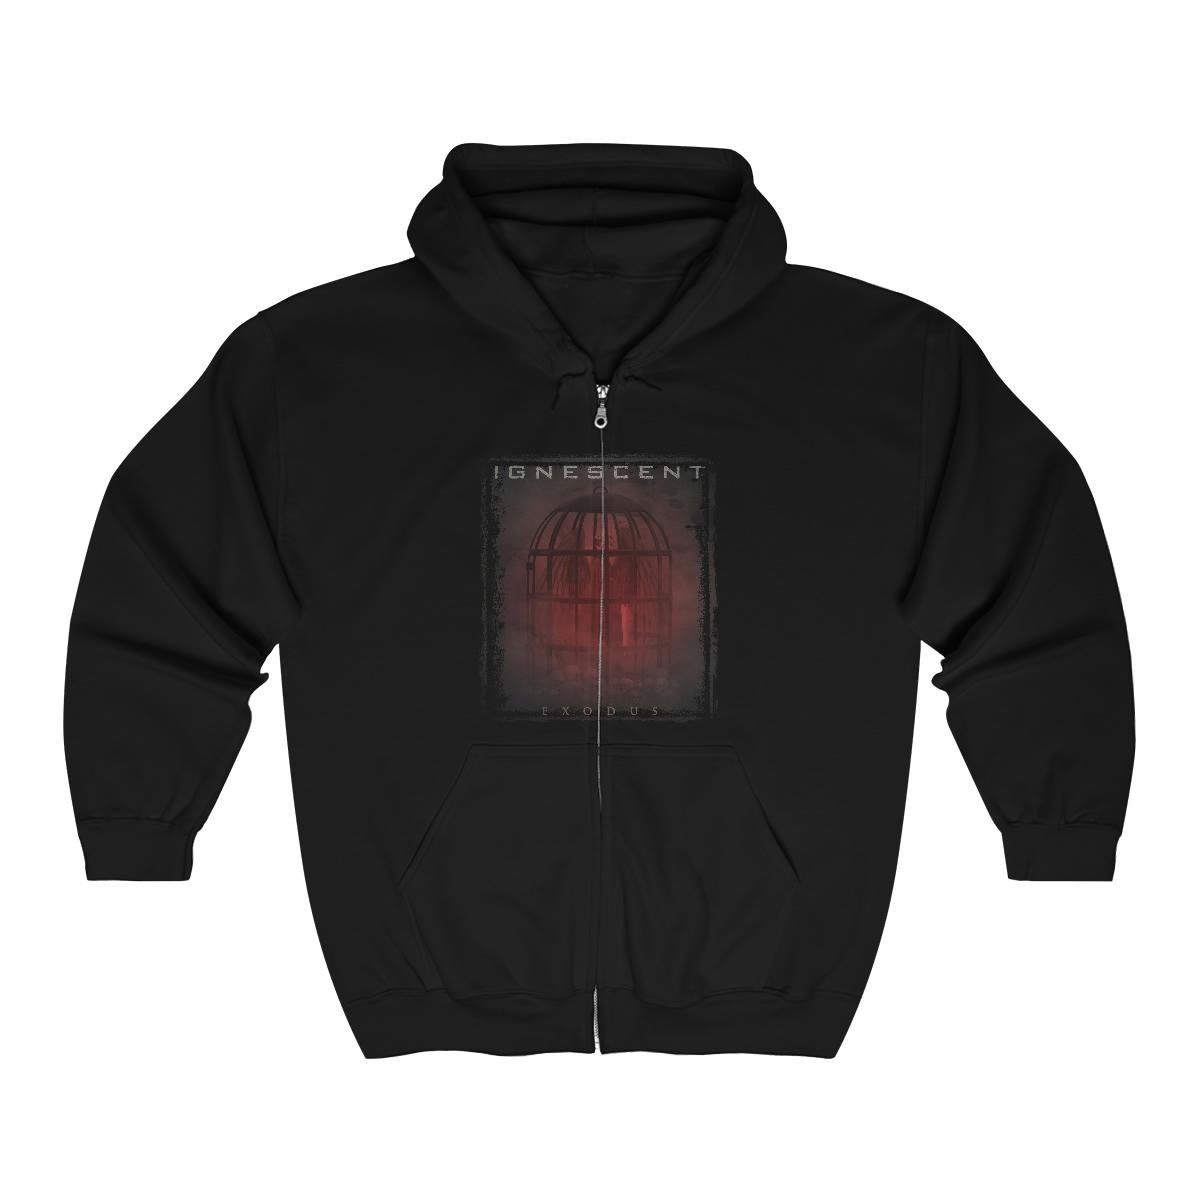 Ignescent – Exodus Full Zip Hooded Sweatshirt (2 Sided)